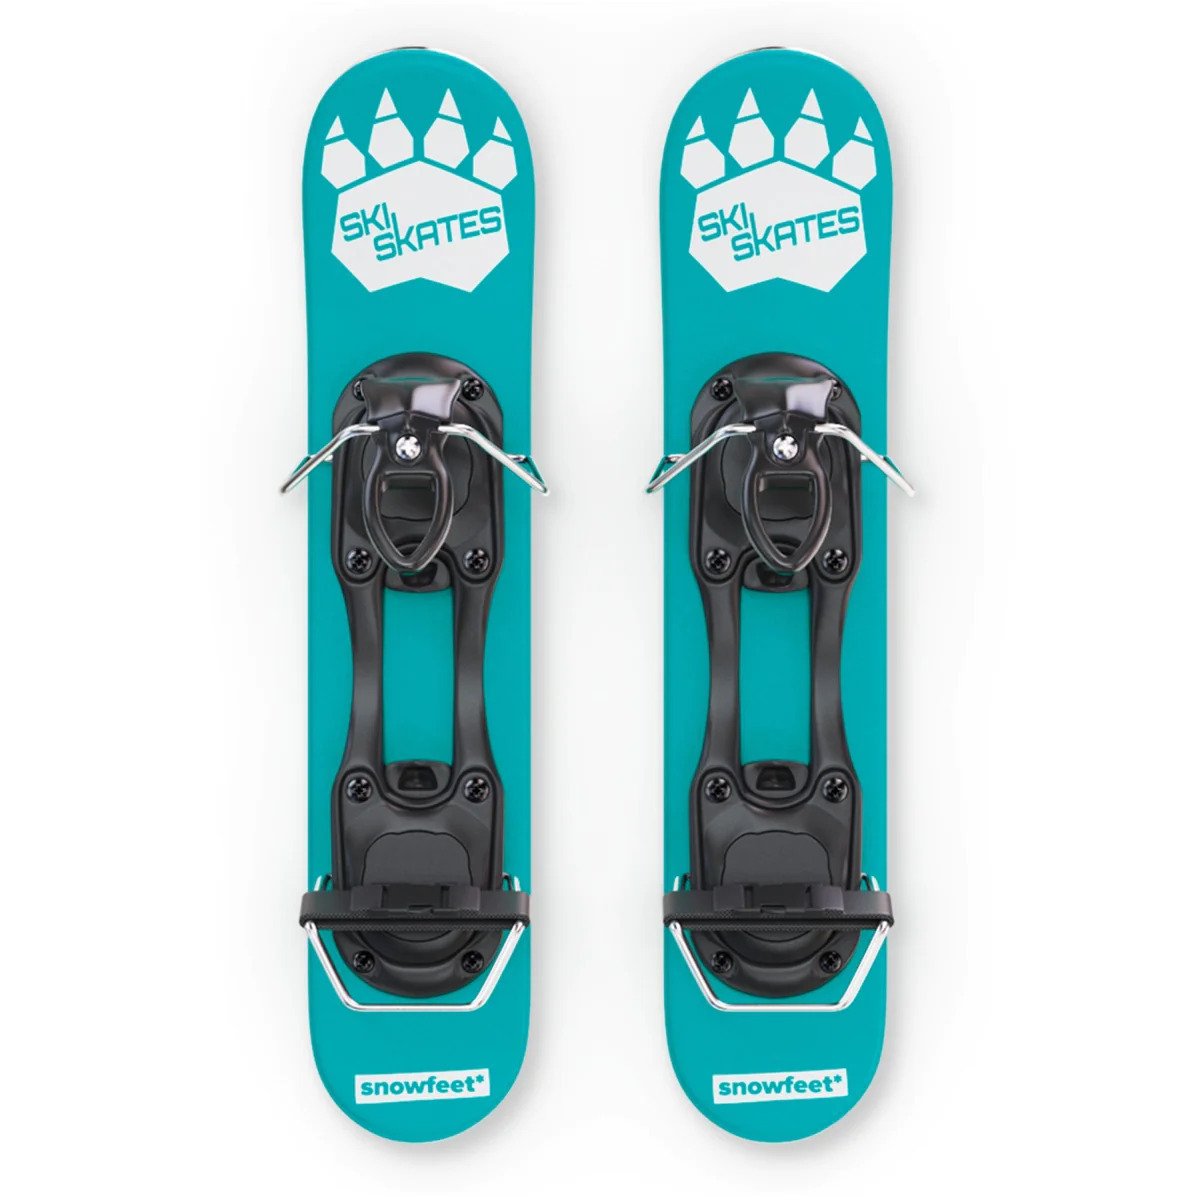 Skiskates - Mini Ski Skates  Snowboard Boots Model - Official Product